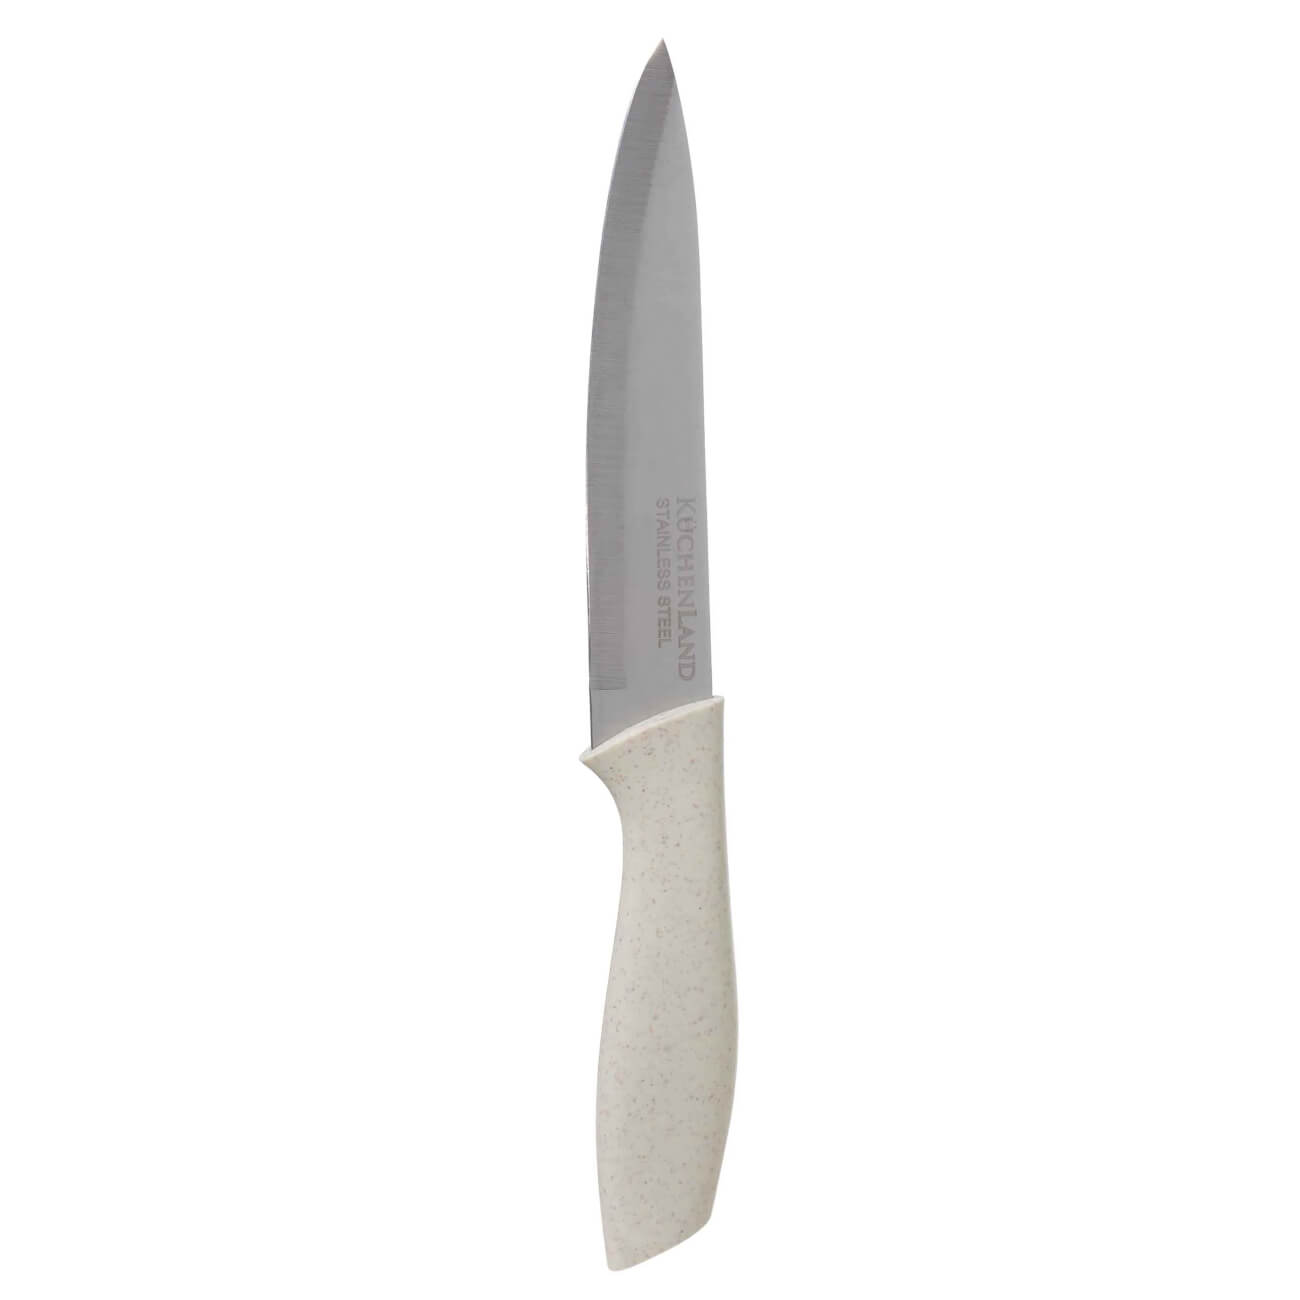 Нож для нарезки, 15 см, сталь/пластик, молочный, Speck-light нож для нарезки соломкой 17 см сталь пластик молочный regular